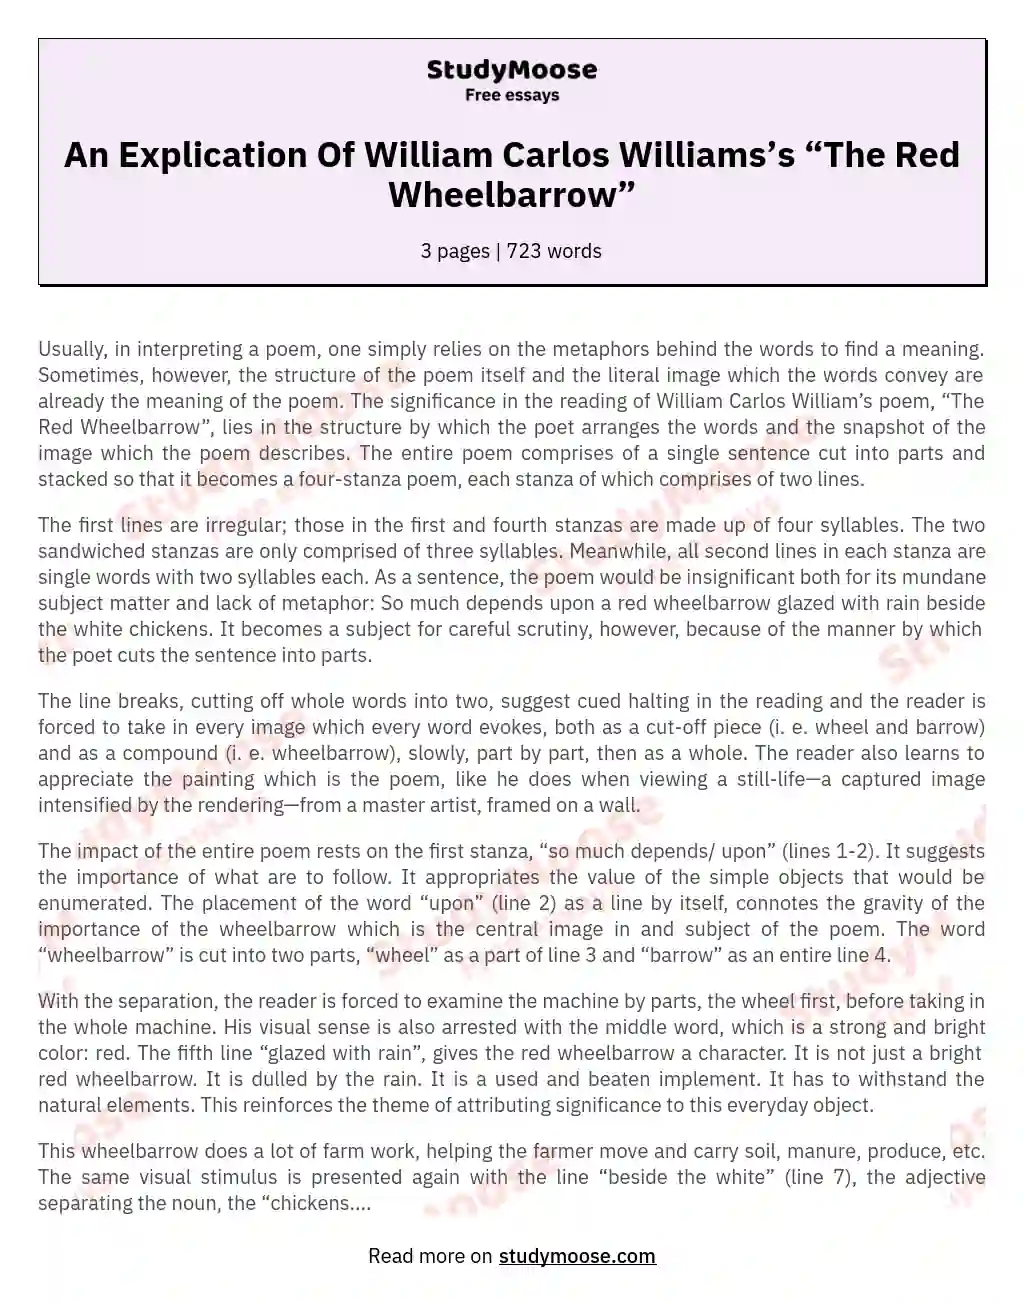 An Explication Of William Carlos Williams’s “The Red Wheelbarrow”